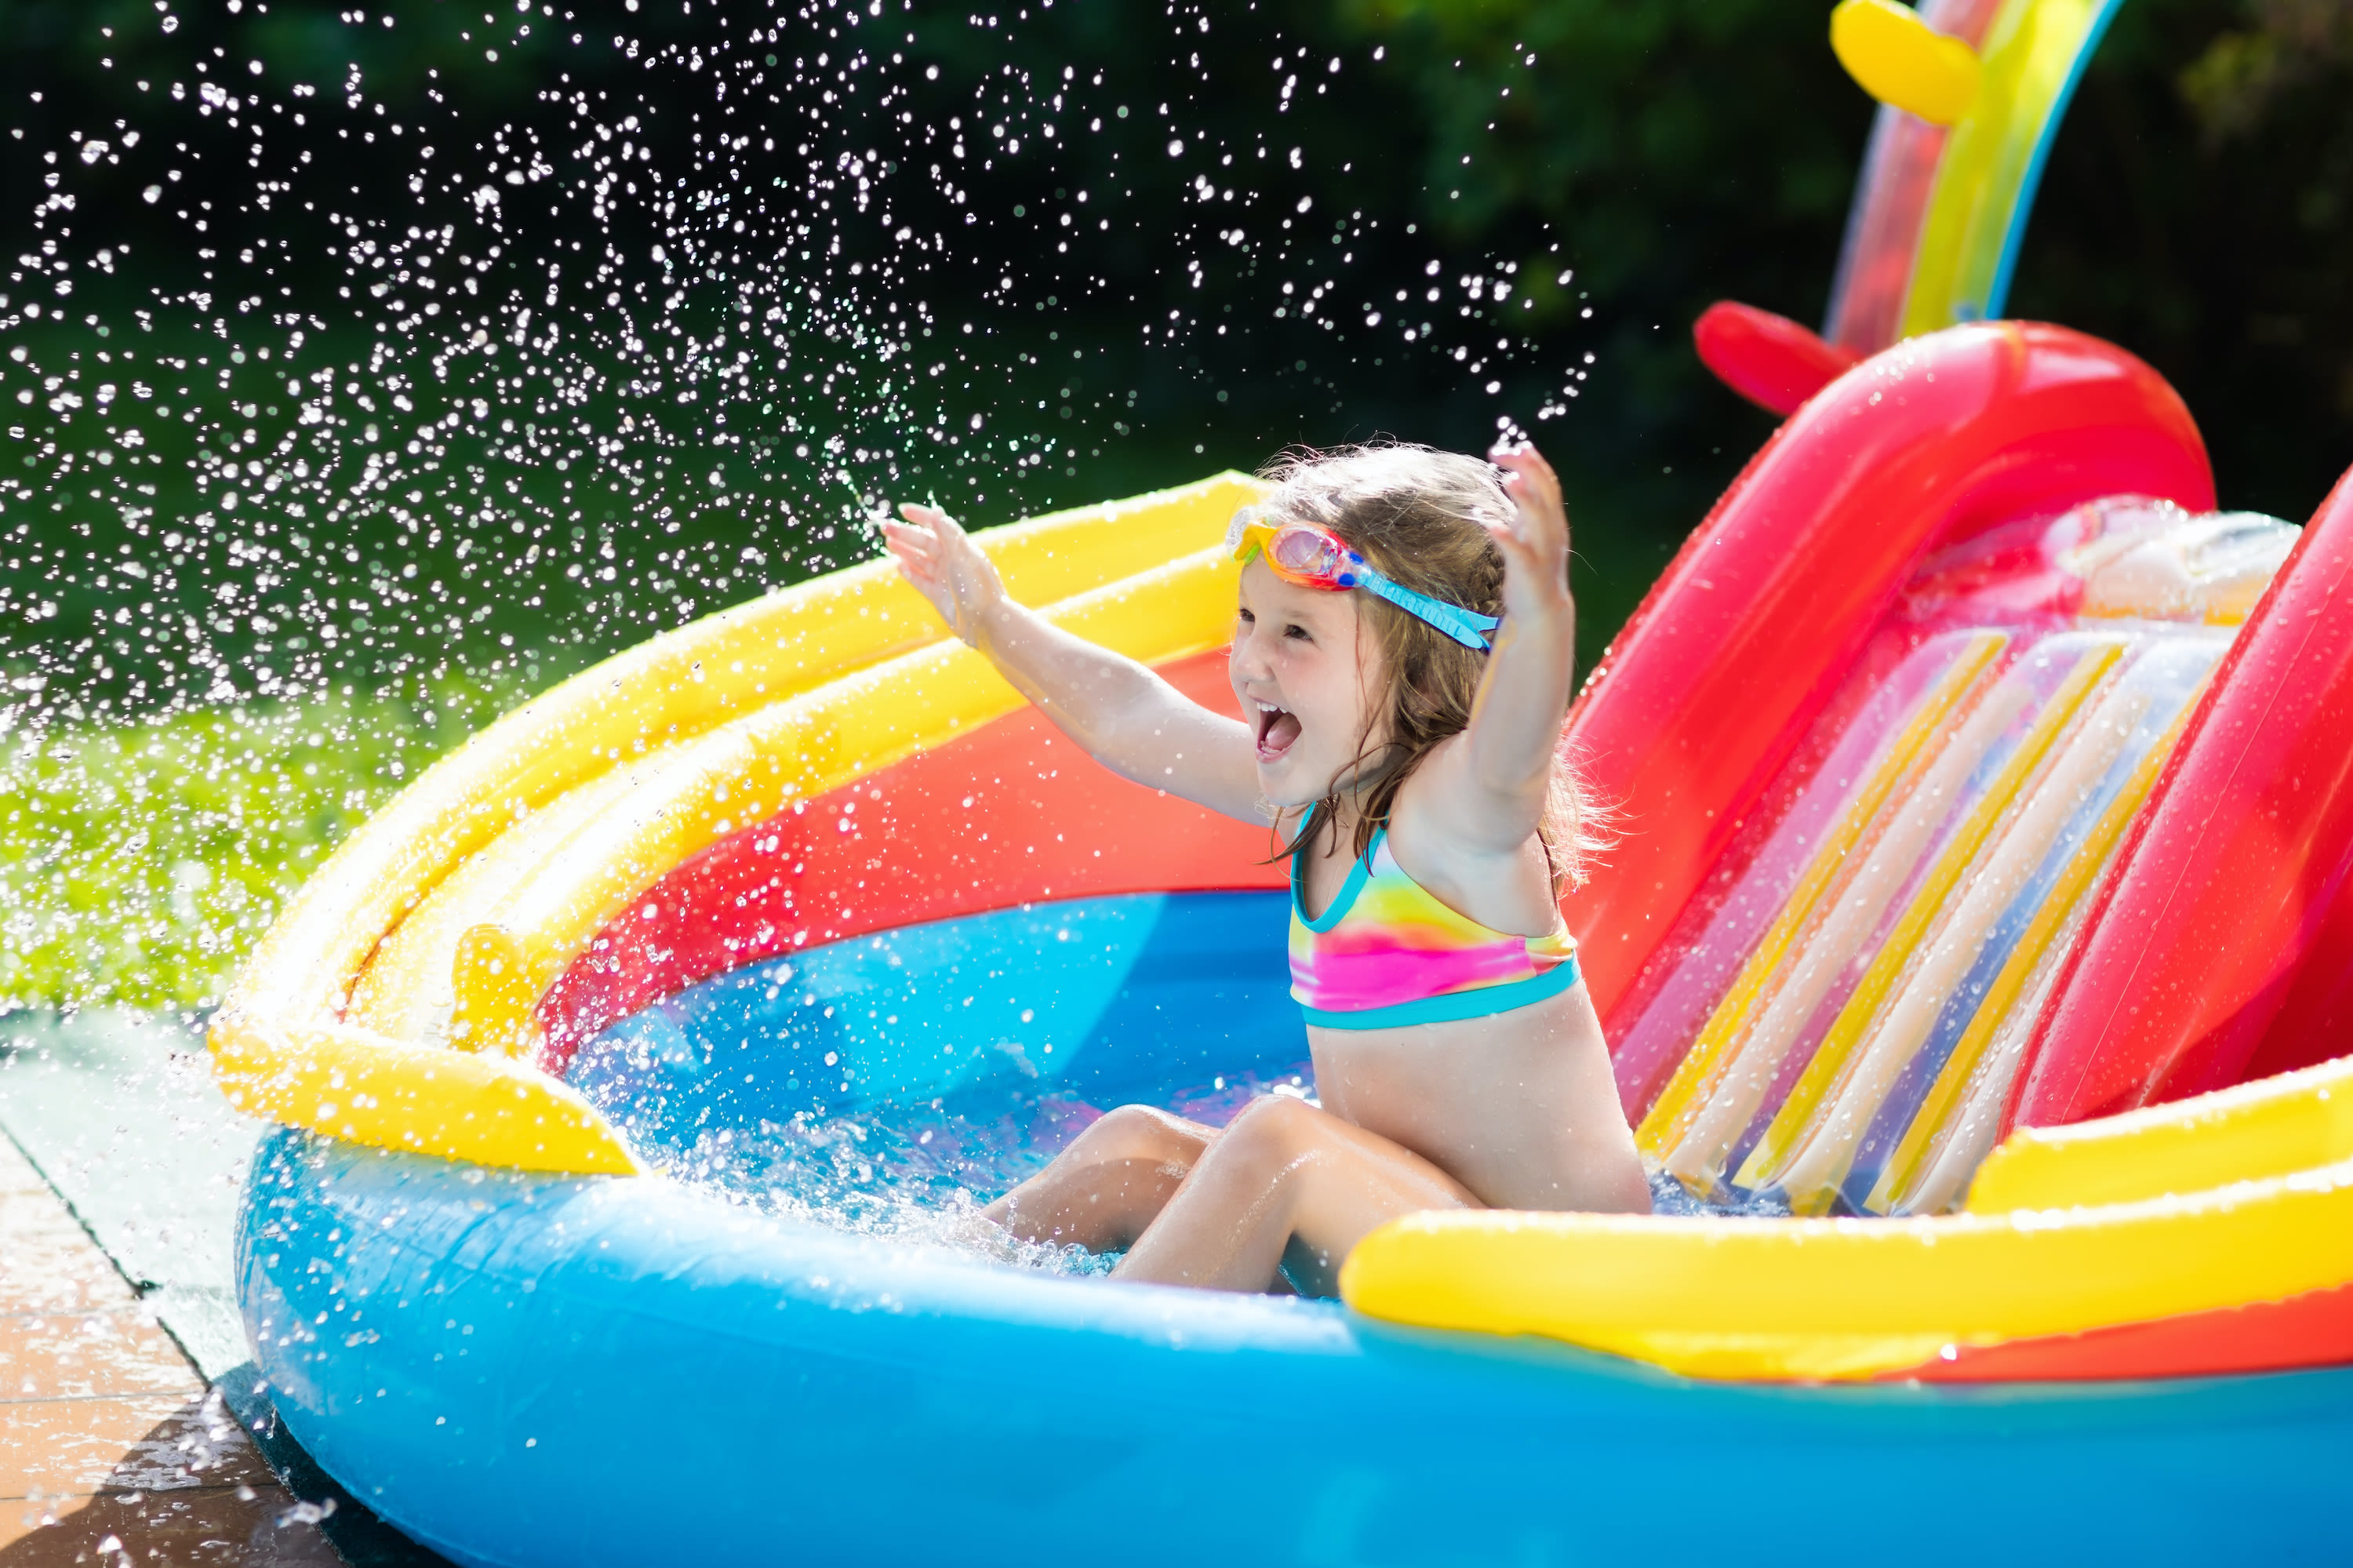 Meisje speelt met water in opblaaszwembad met glijbaan. Foto: Adobe Stock / famveldman